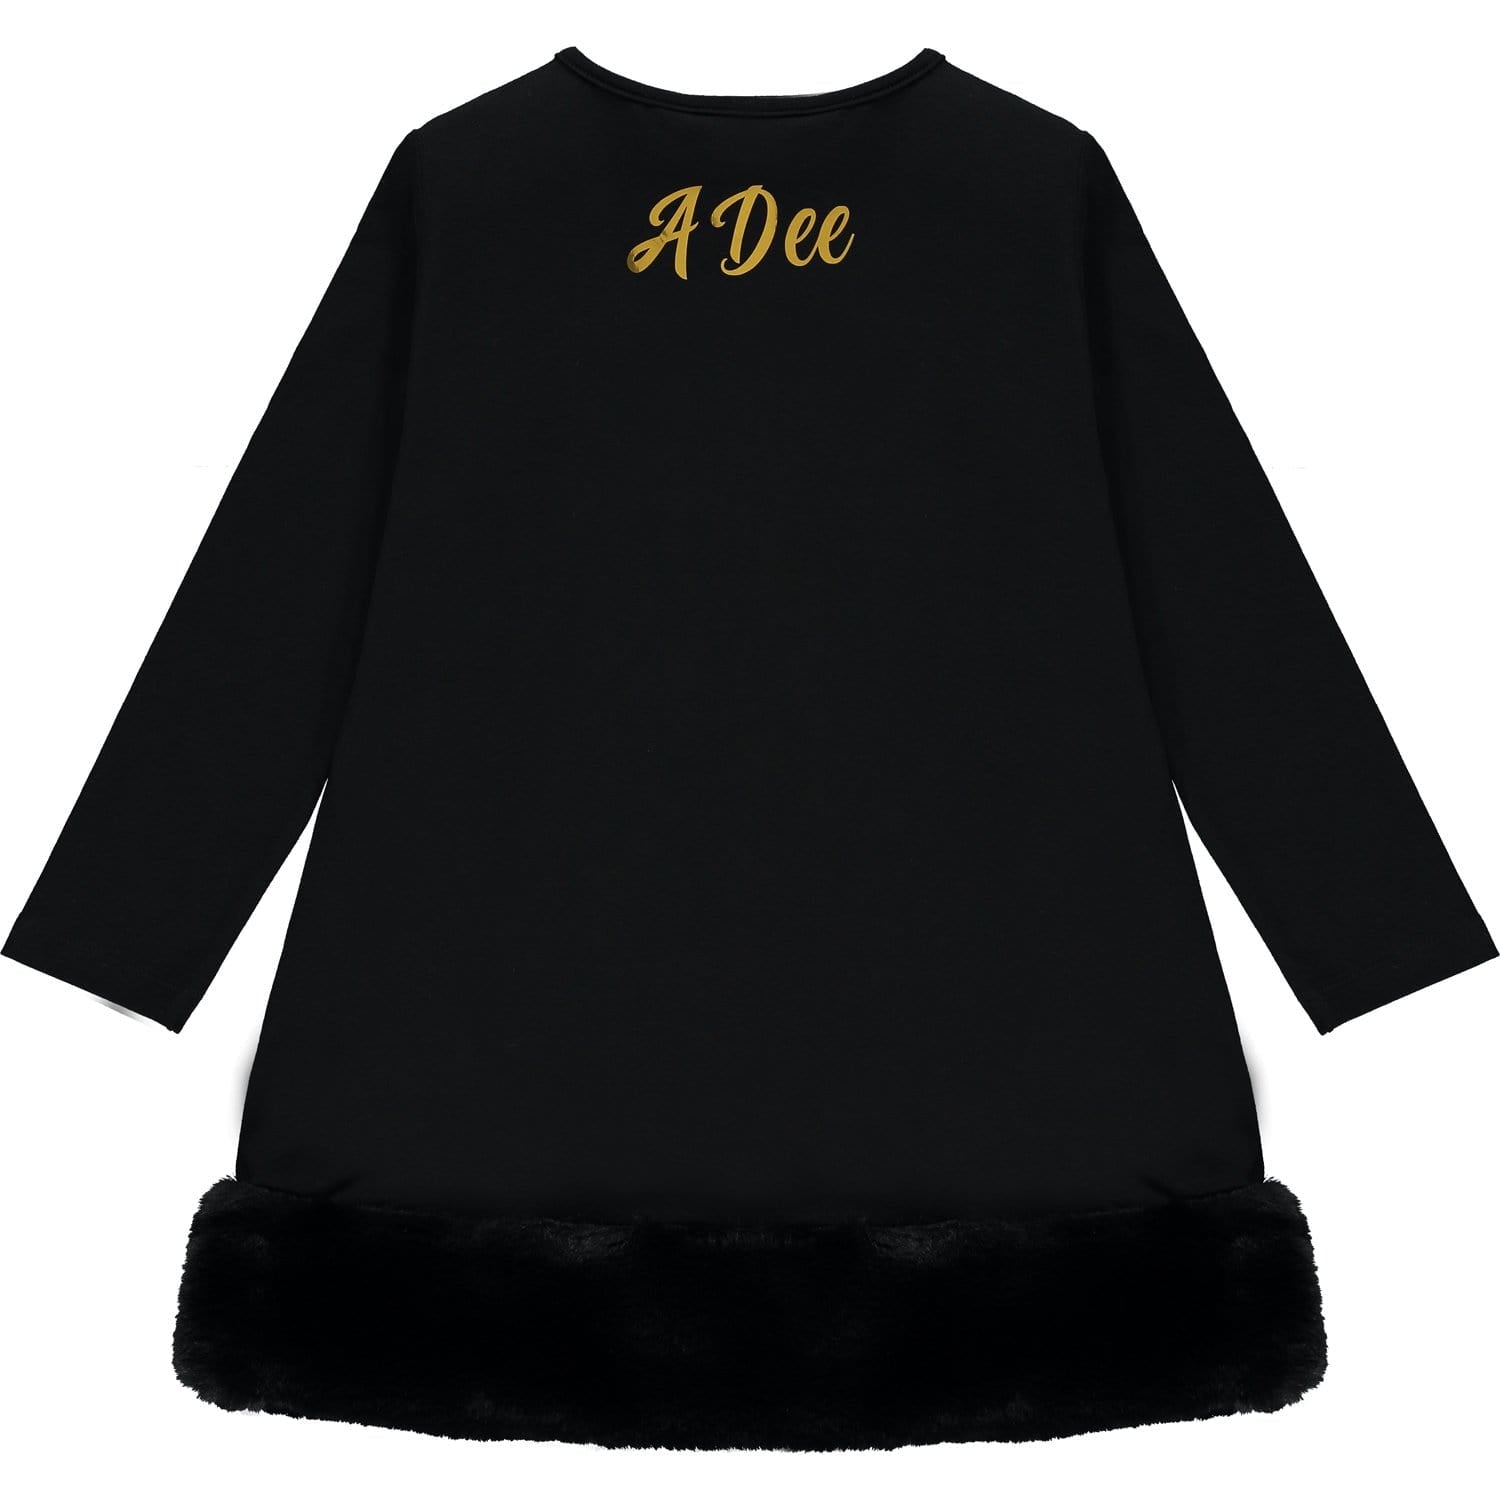 A DEE - Paw Print Dress - Black